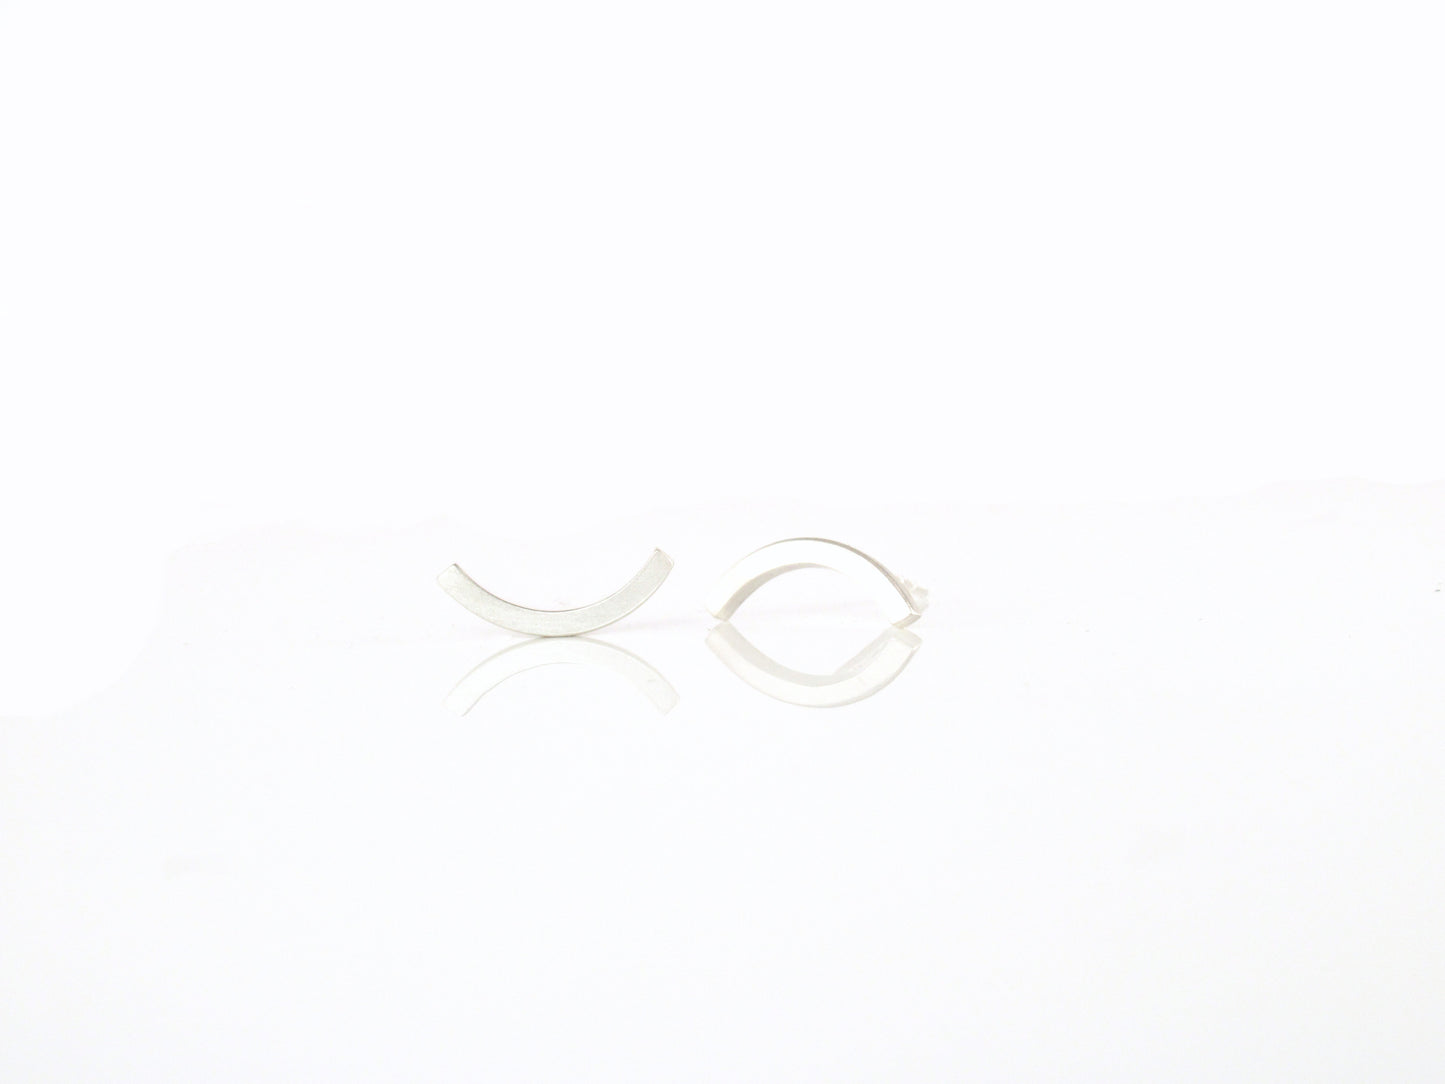 Earrings made by ZEALmetal, Nicole Horlor, Kingston, ON, Canada